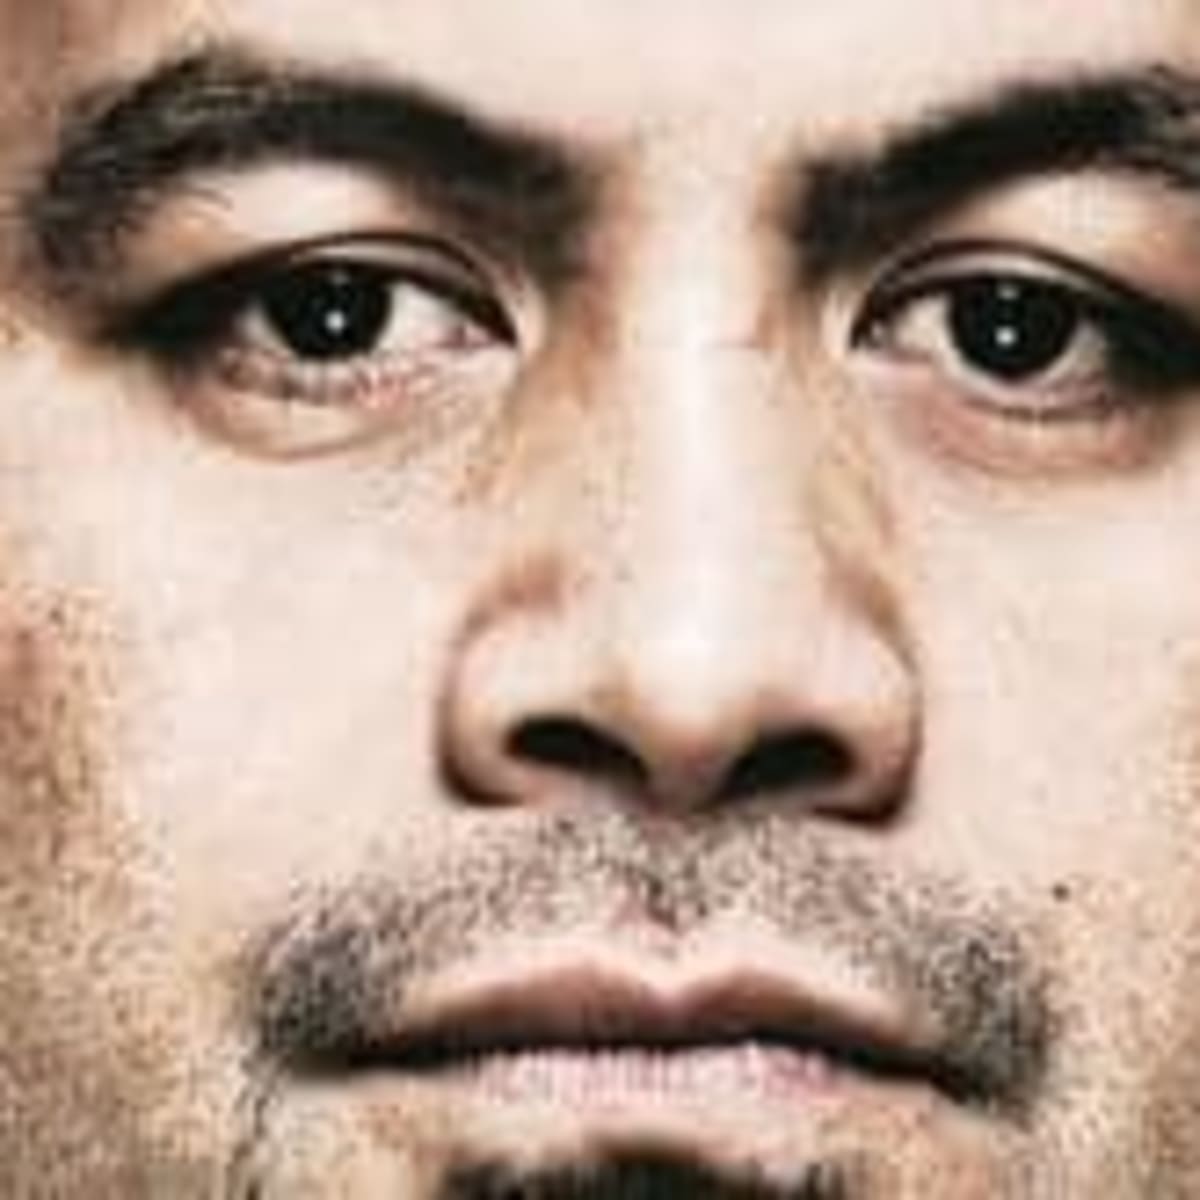 Former UFC heavyweight champion Fabricio Werdum has eyelid 'ripped